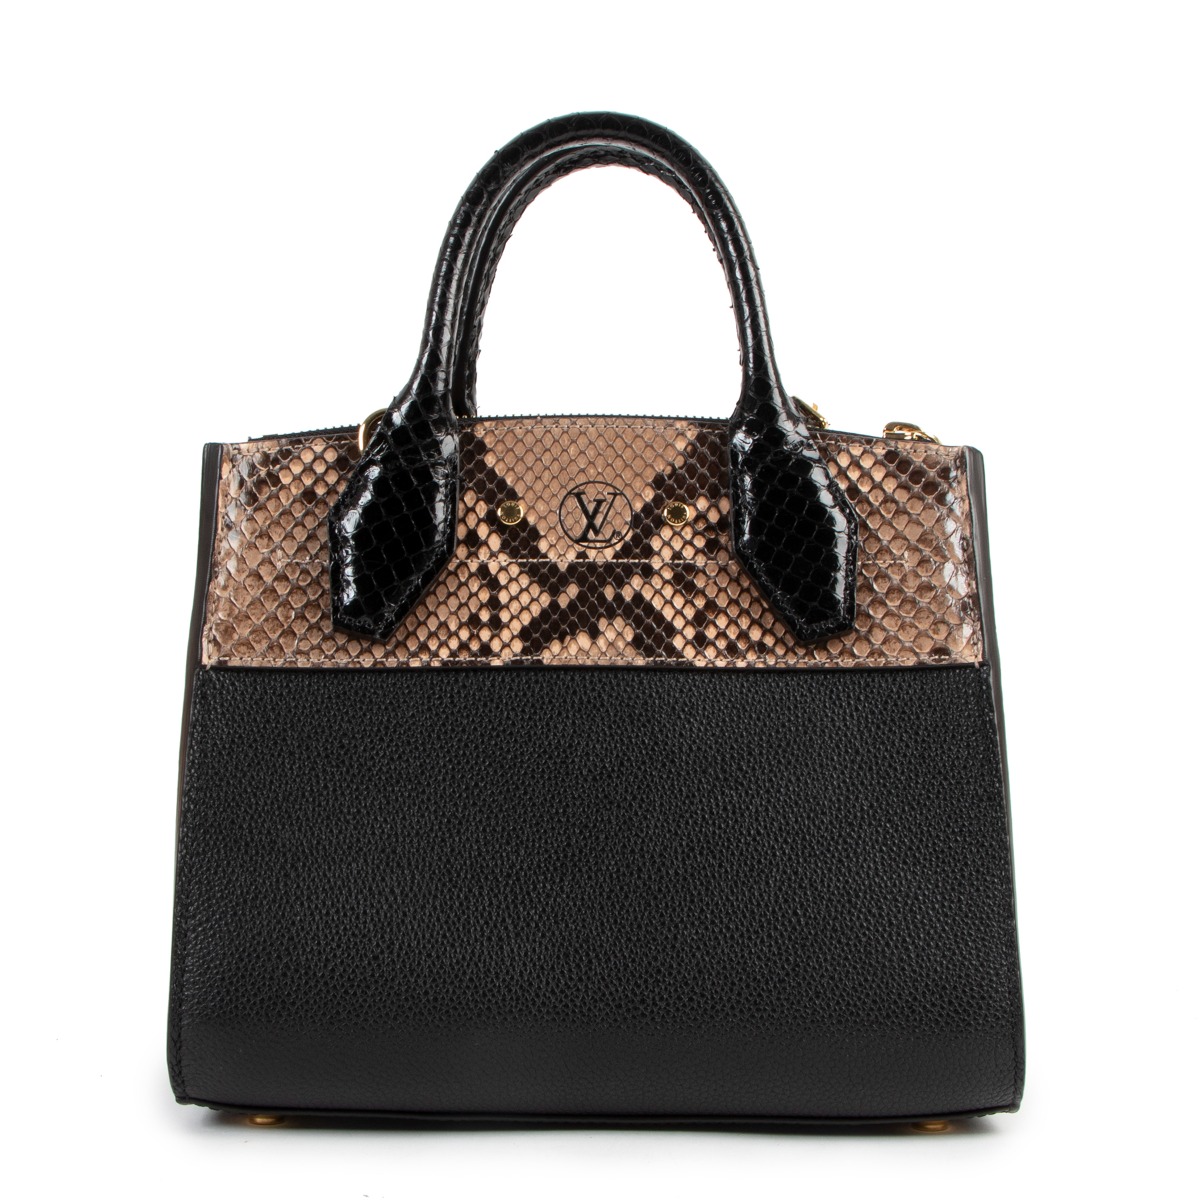 Louis Vuitton python handle handbag - clothing & accessories - by owner -  apparel sale - craigslist